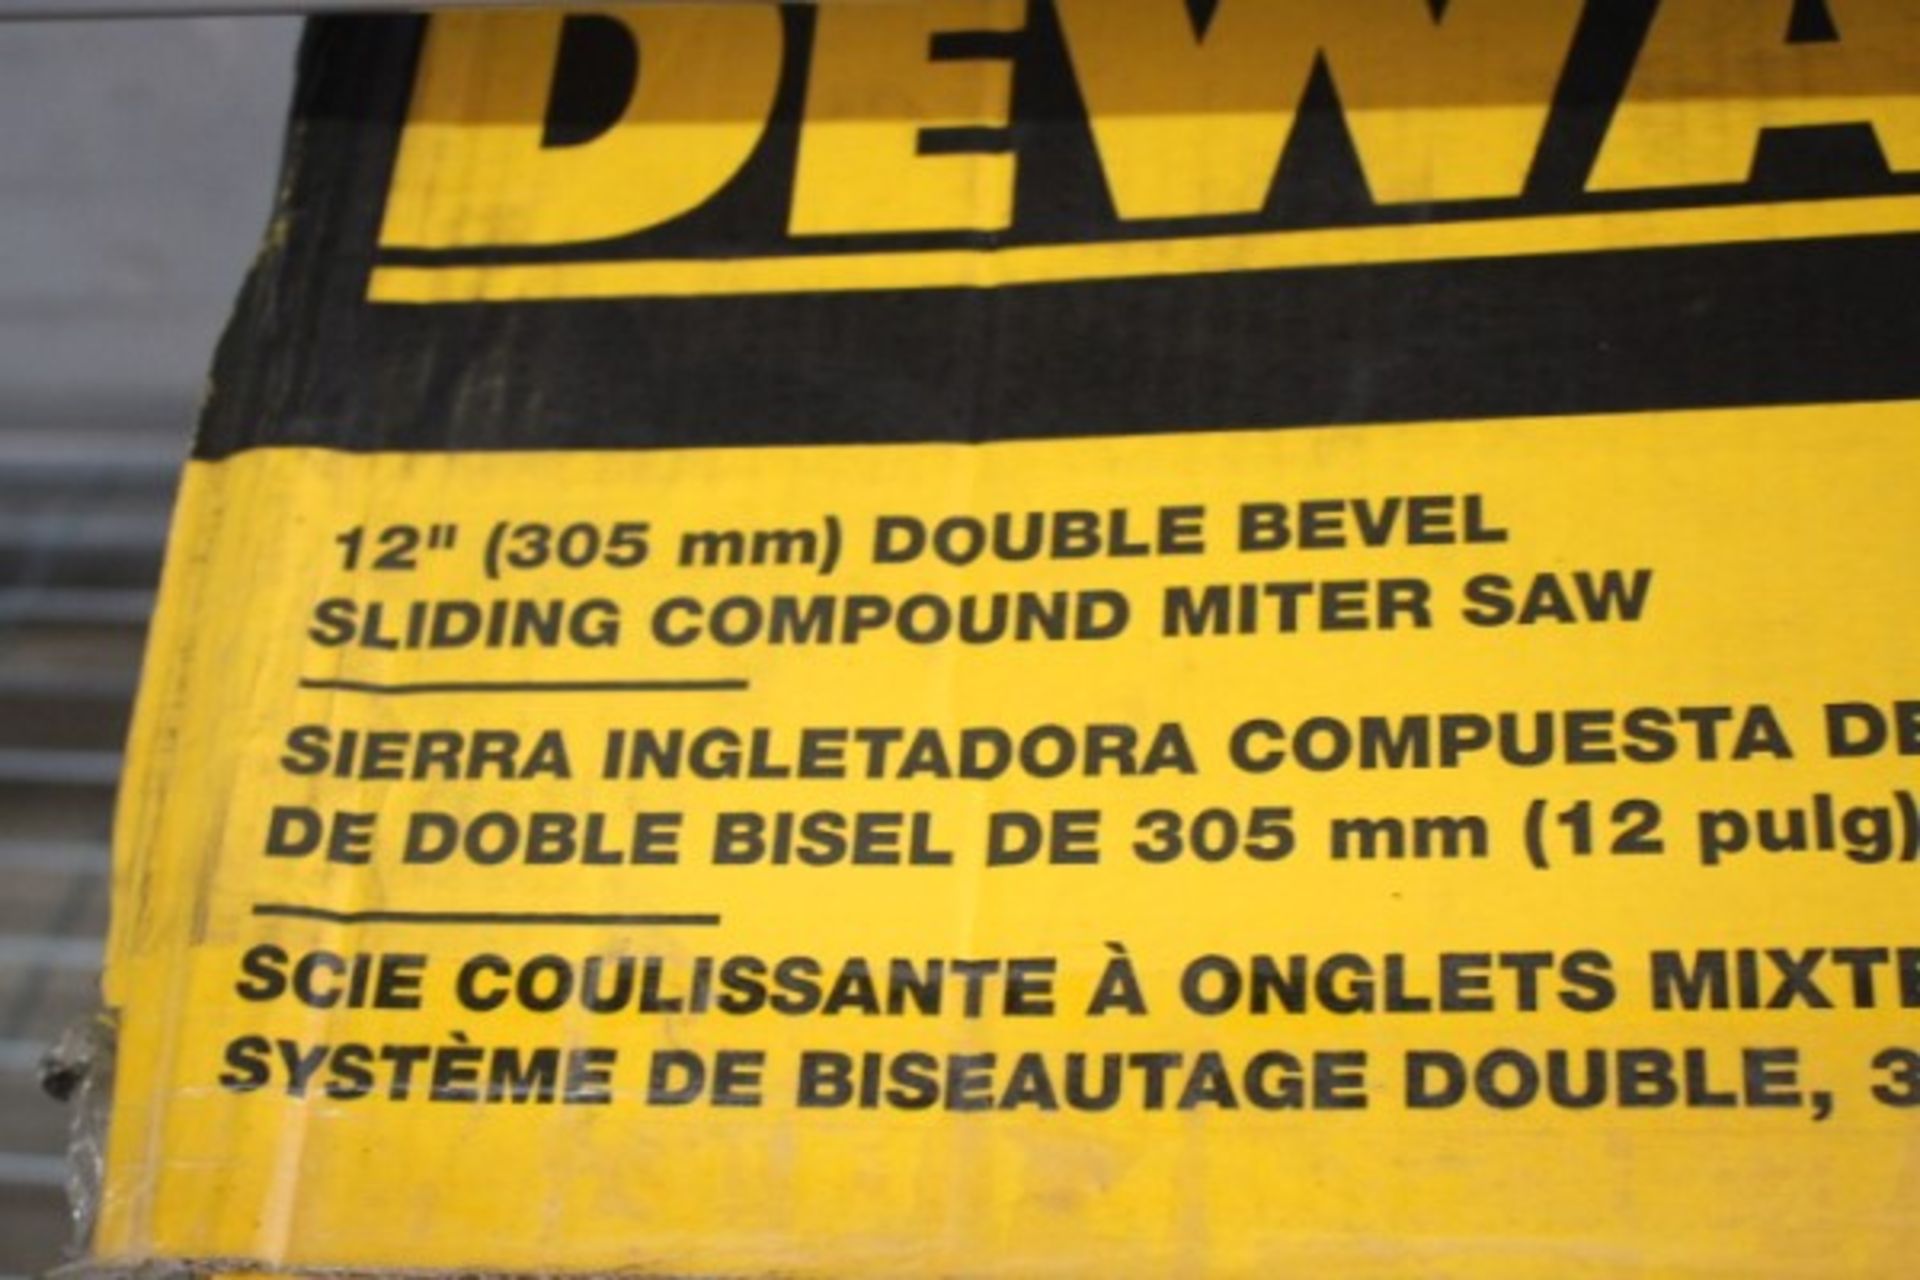 New Dewalt 12" Double Bevel Sliding Compound Miter Saw M#DWS780 - Image 2 of 2